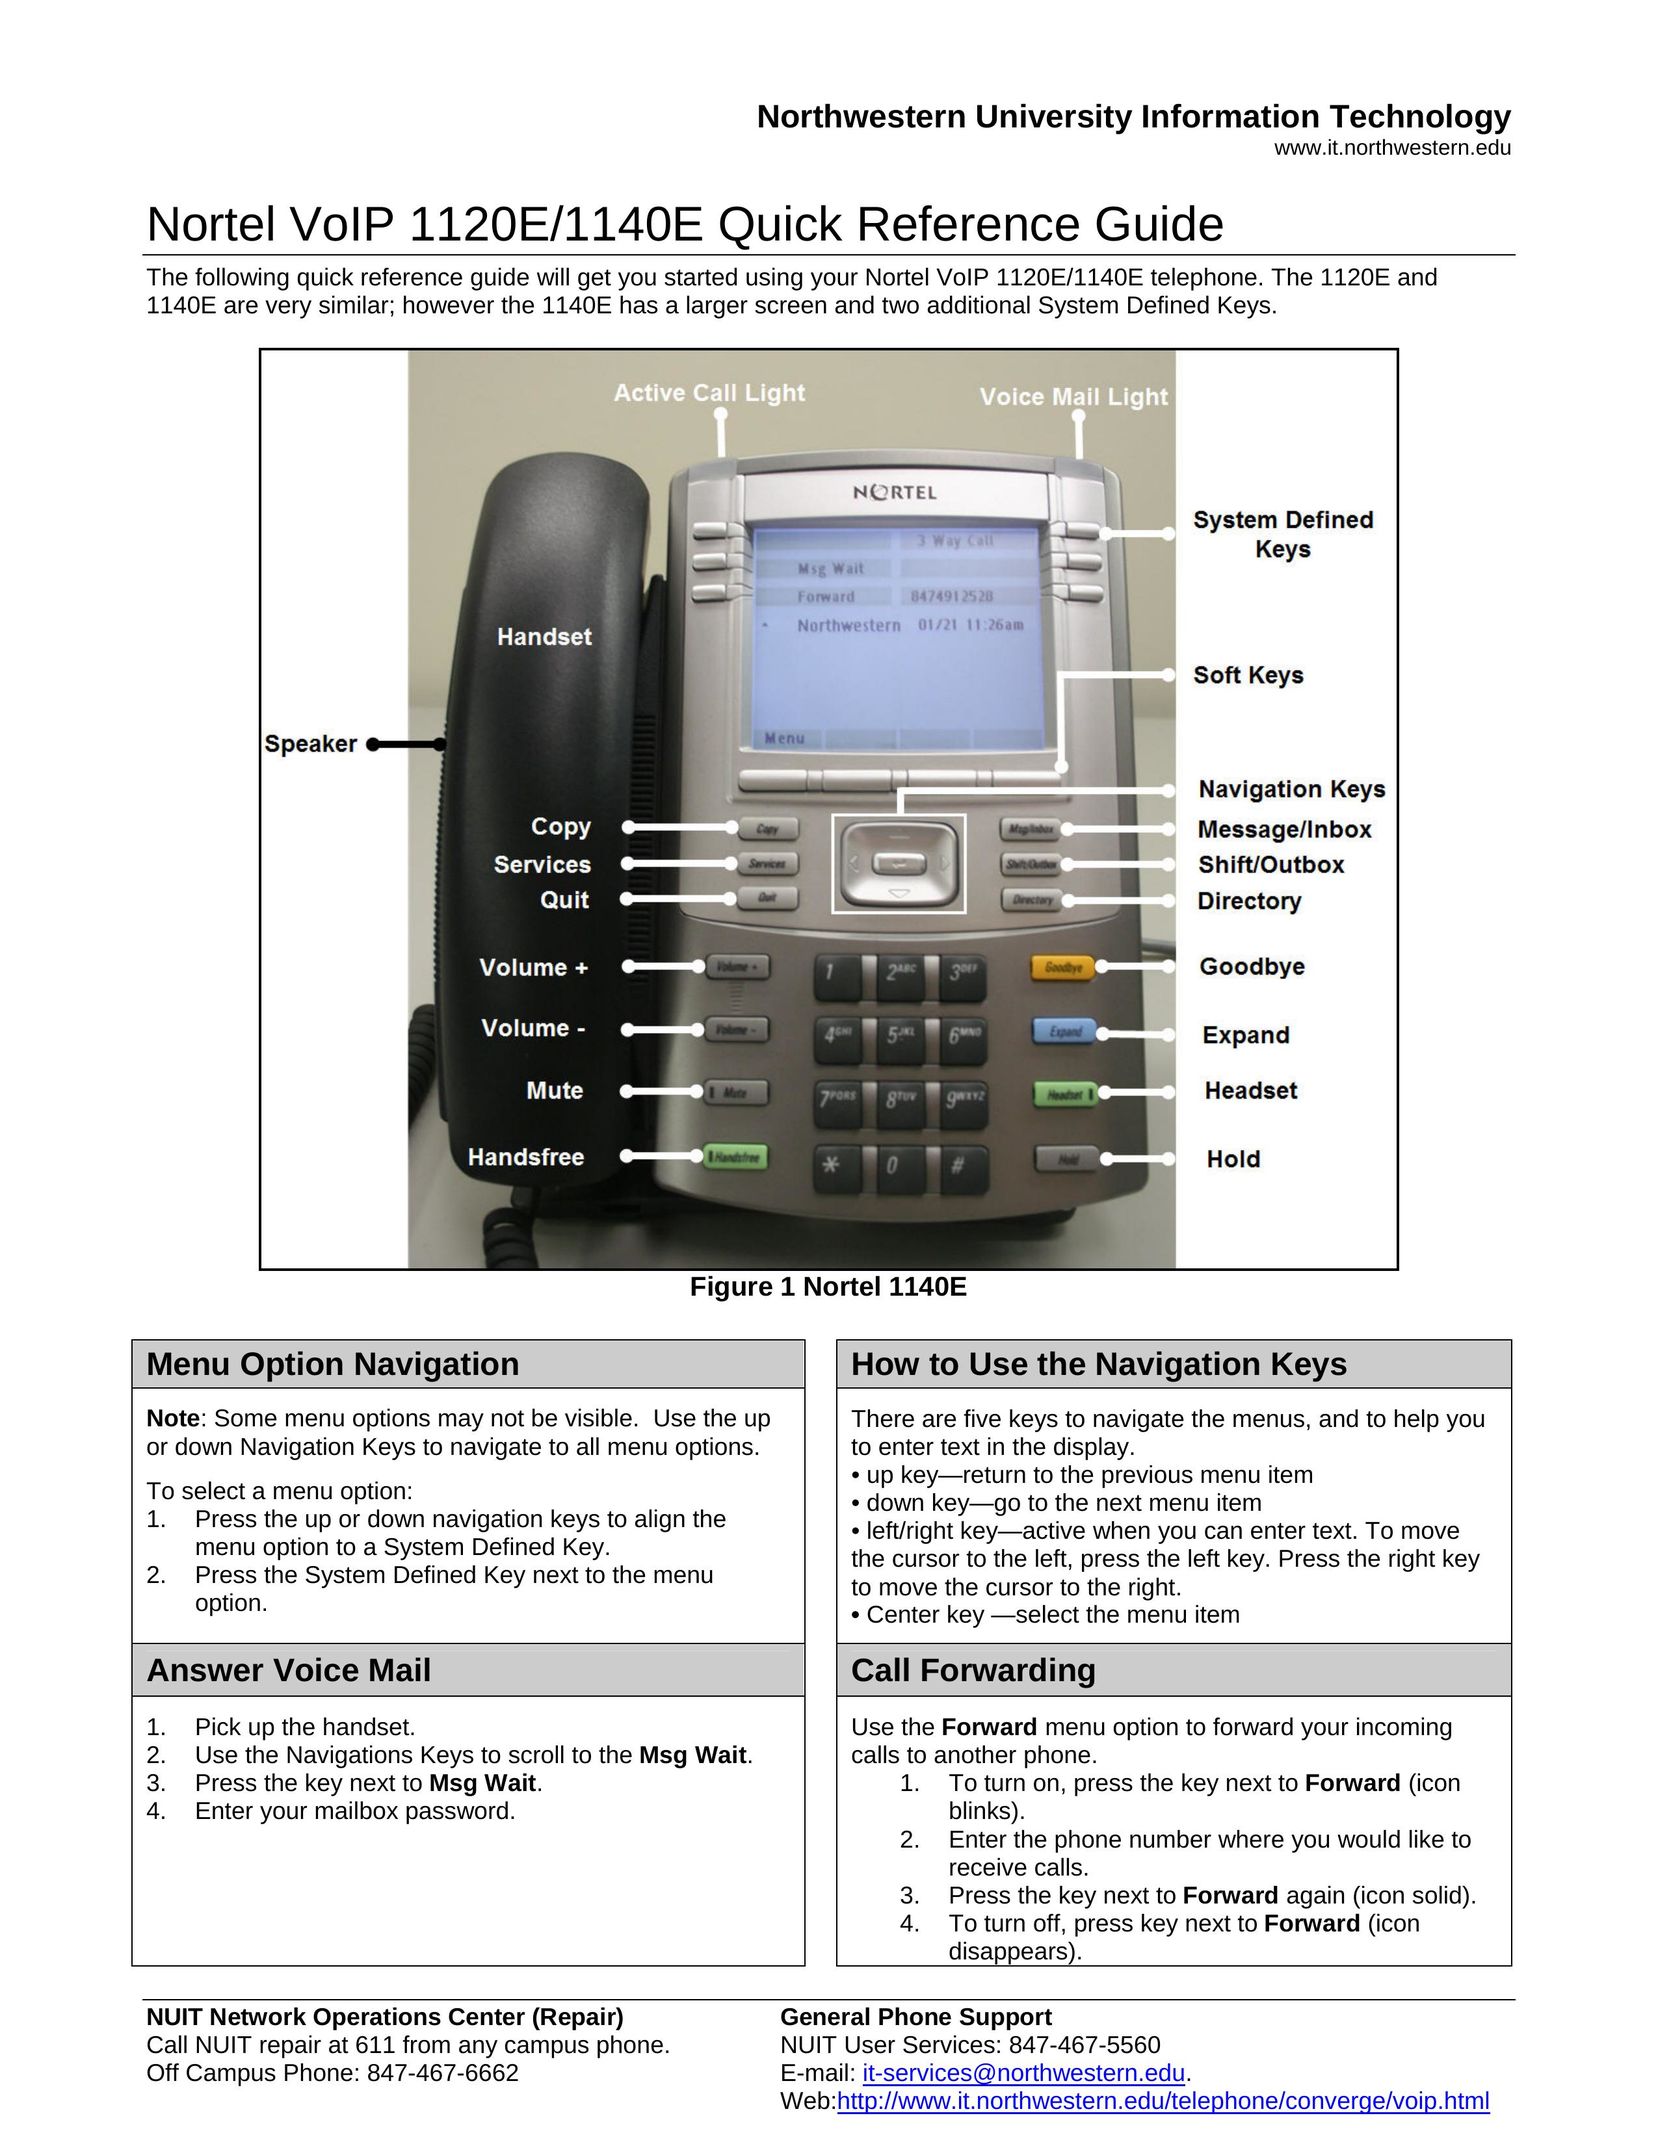 Nortel Networks 1120E/1140E Cordless Telephone User Manual